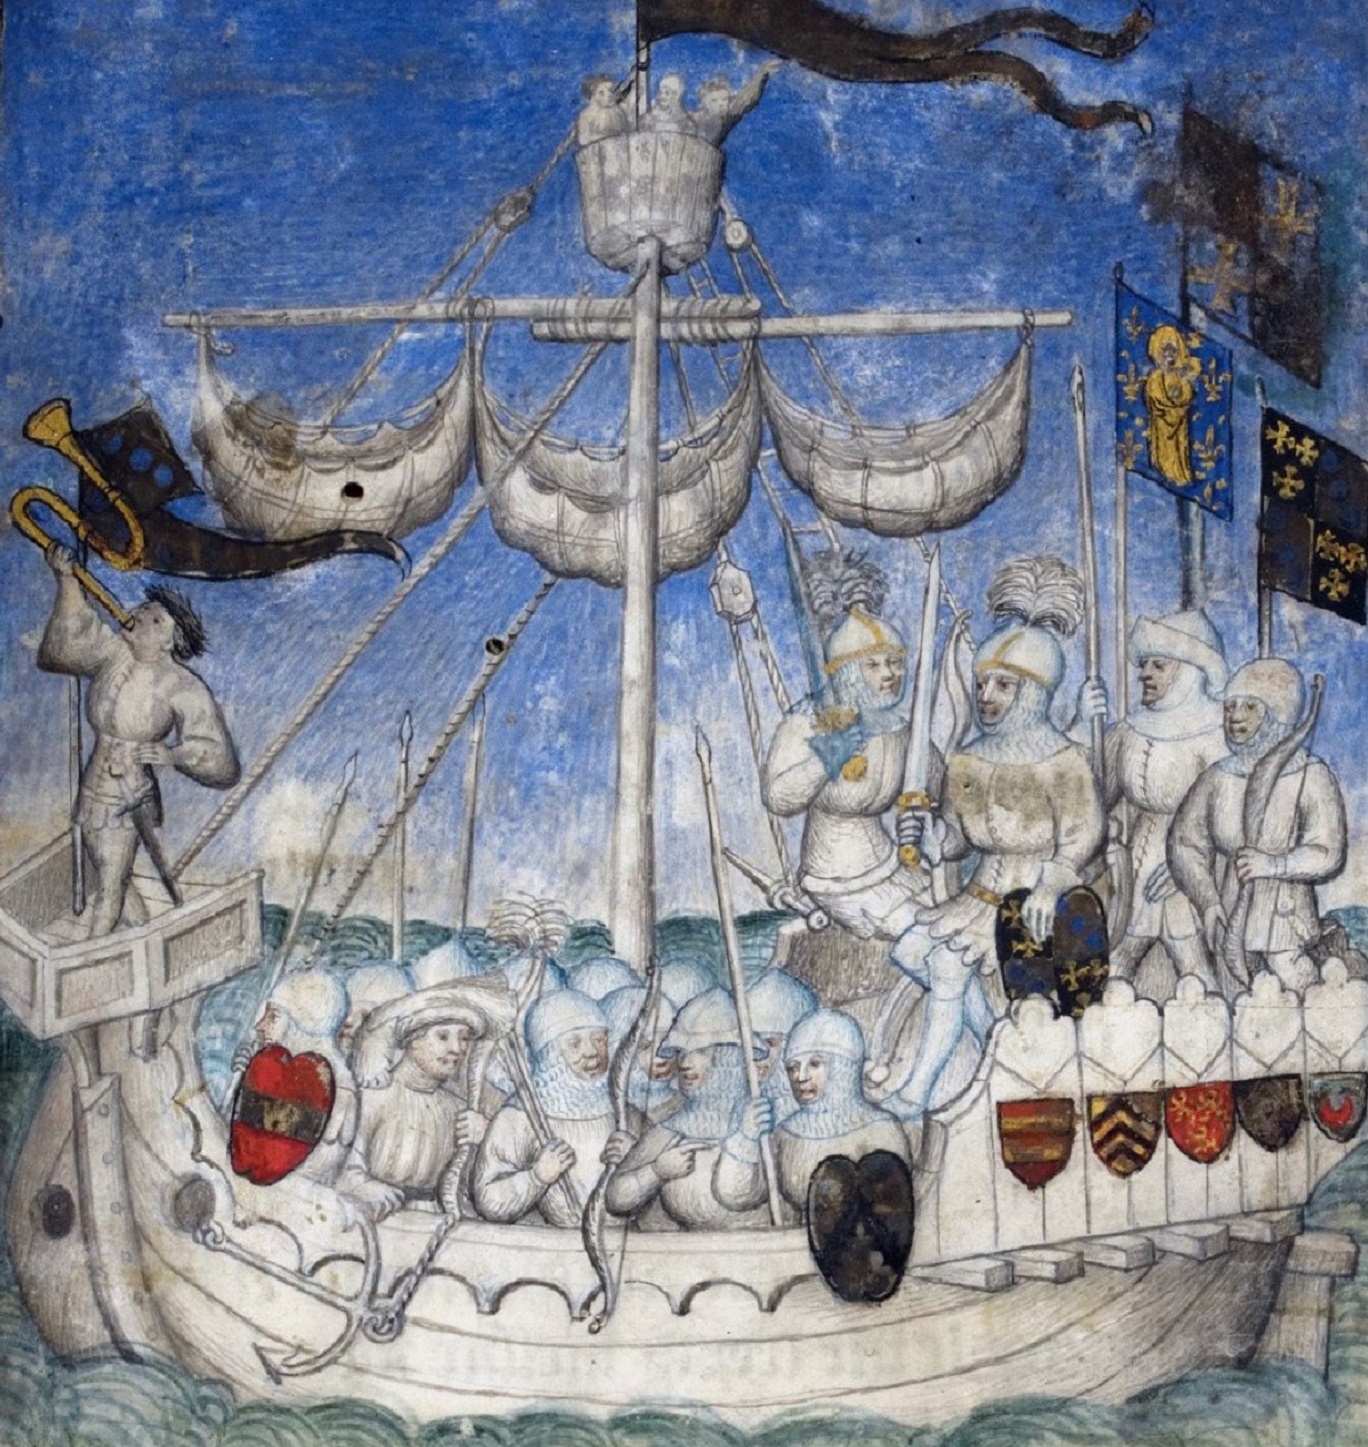 Illuminated manuscript showing a ship